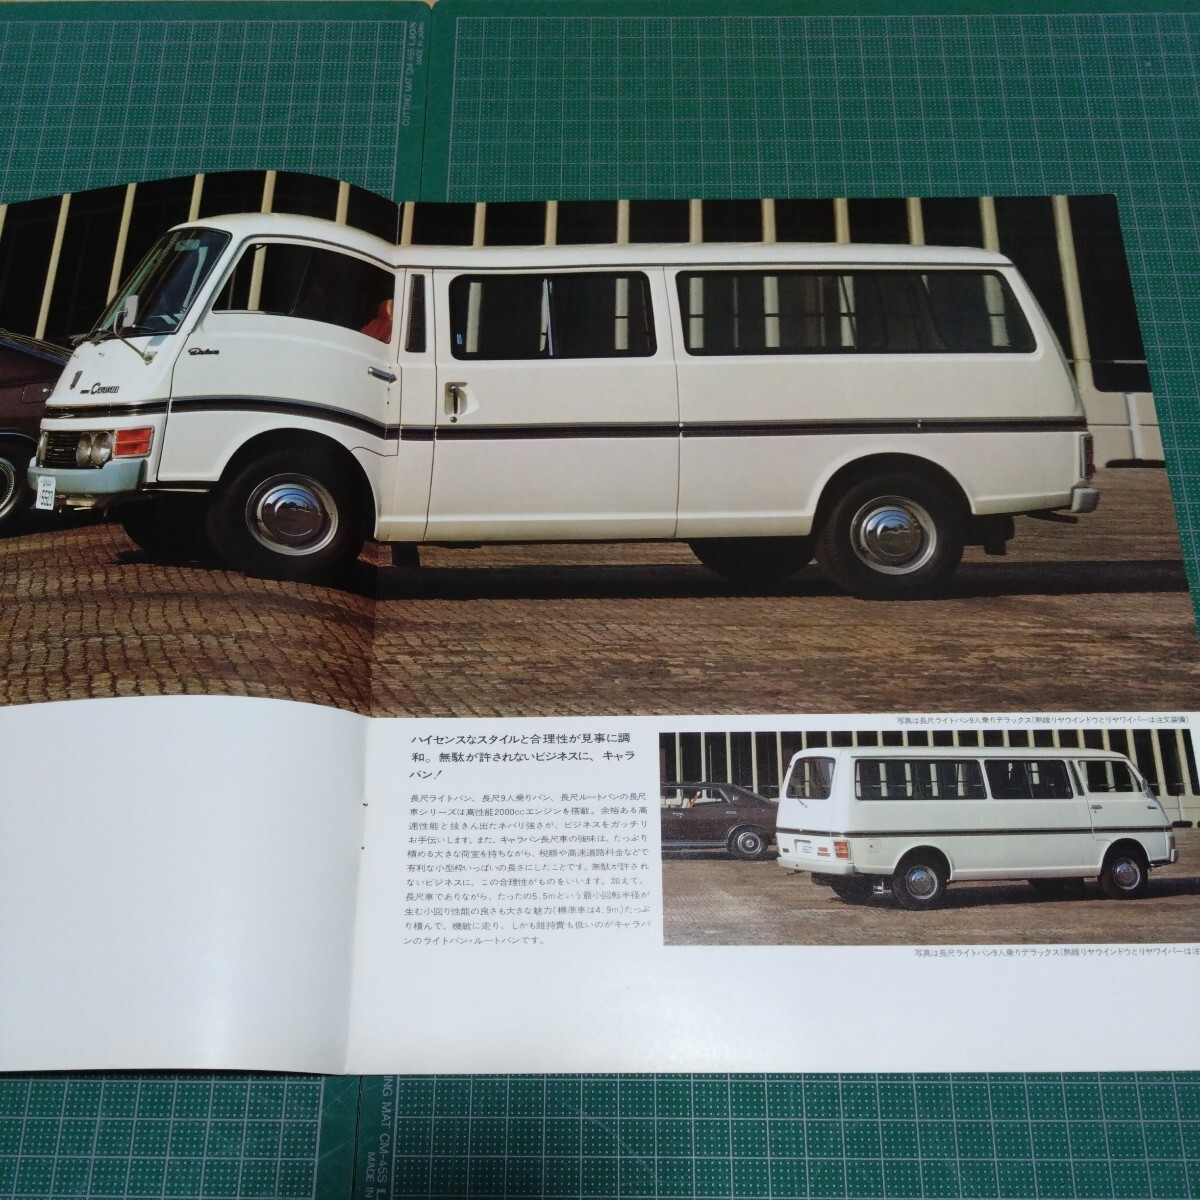  Nissan Caravan Light Van rootvan каталог проспект годы неизвестен 